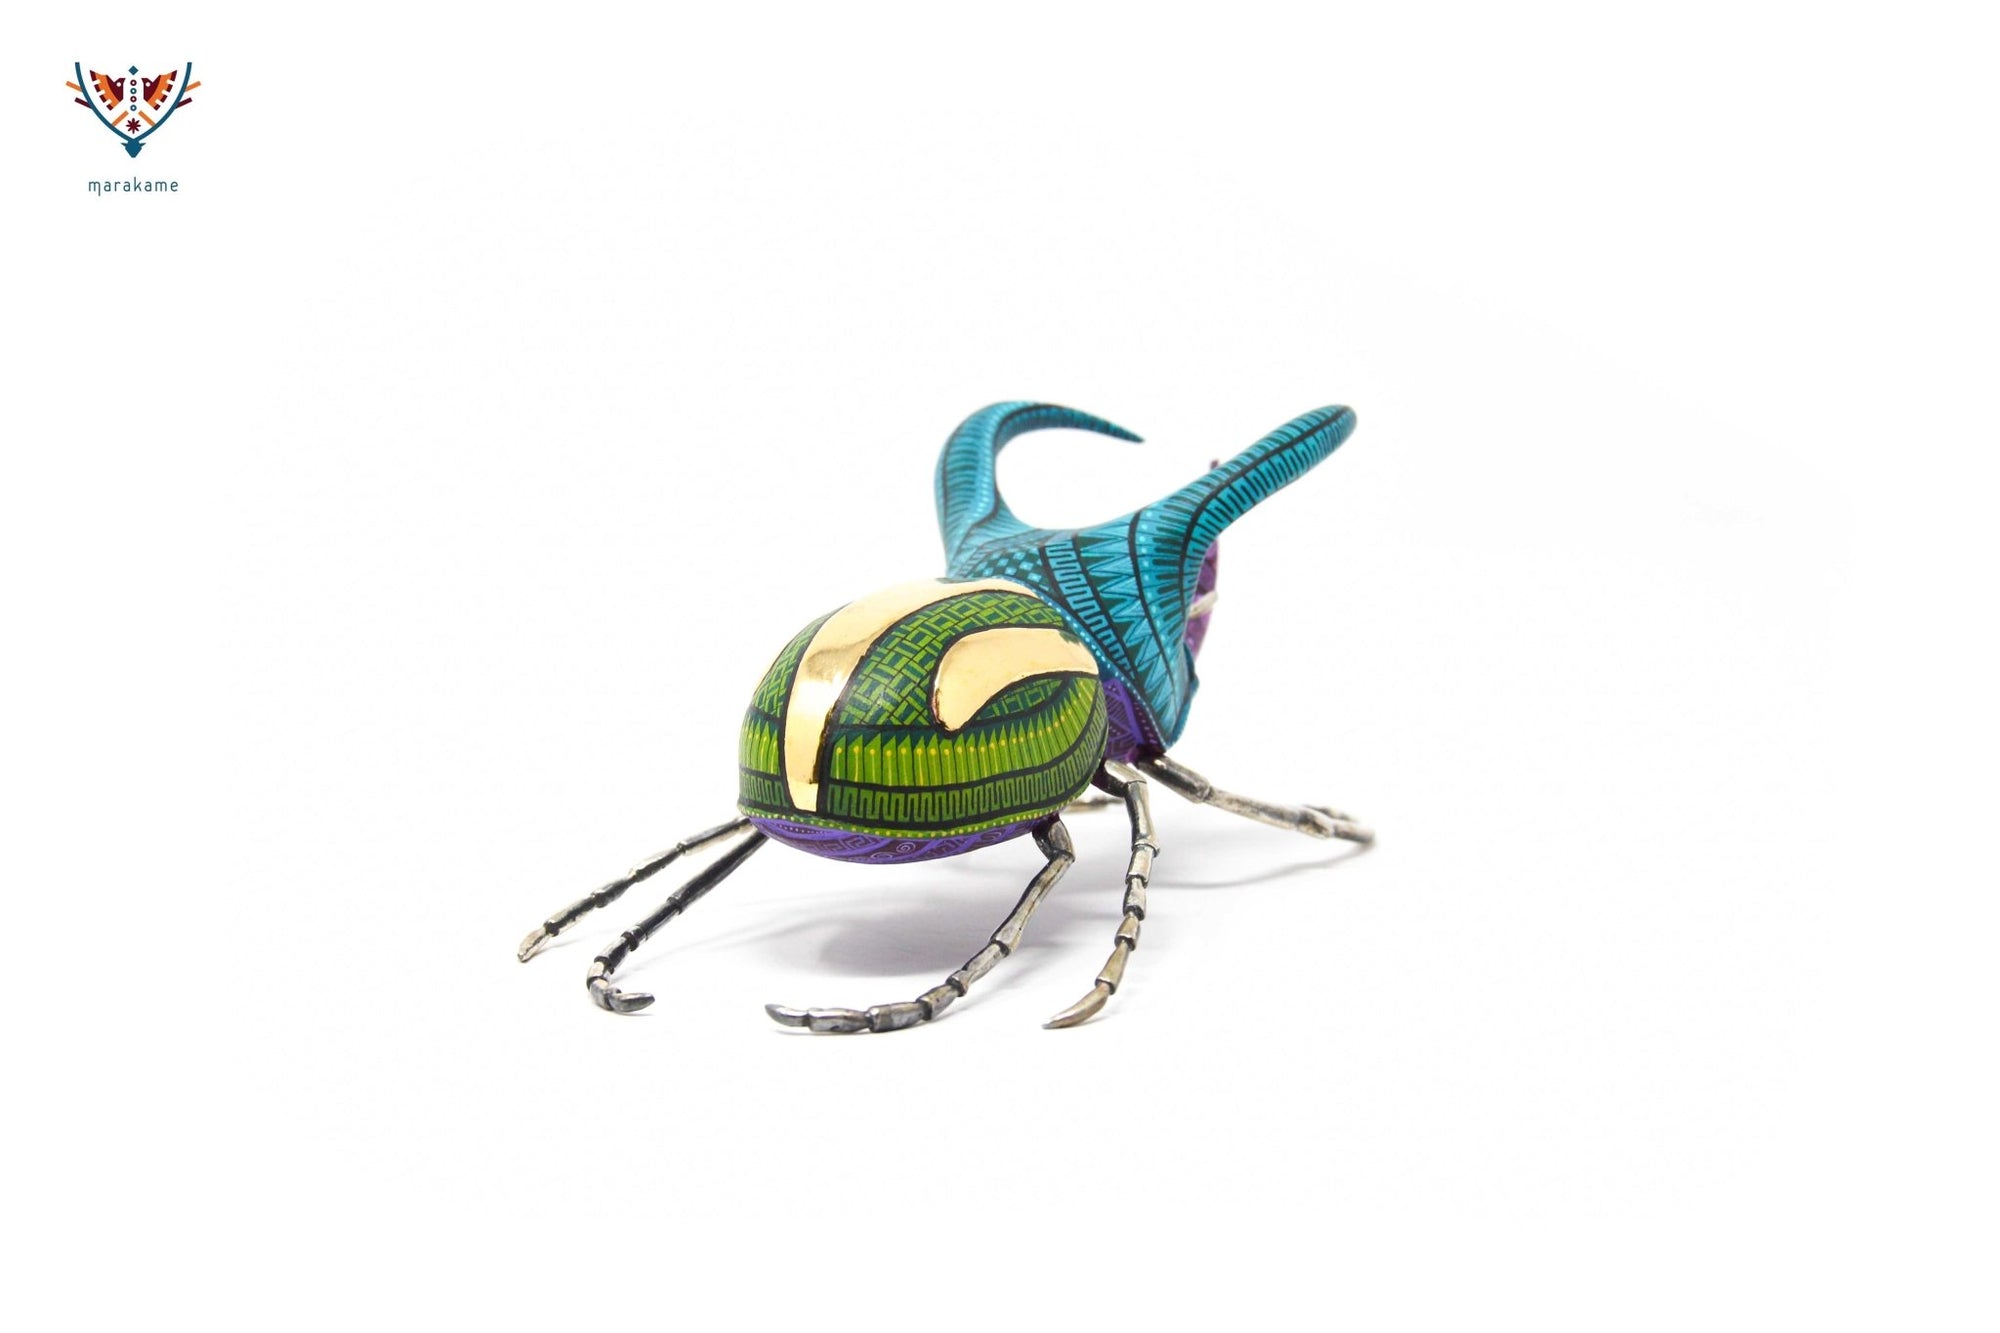 Male beetle - Witol yee mash IV - Huichol art - Marakame